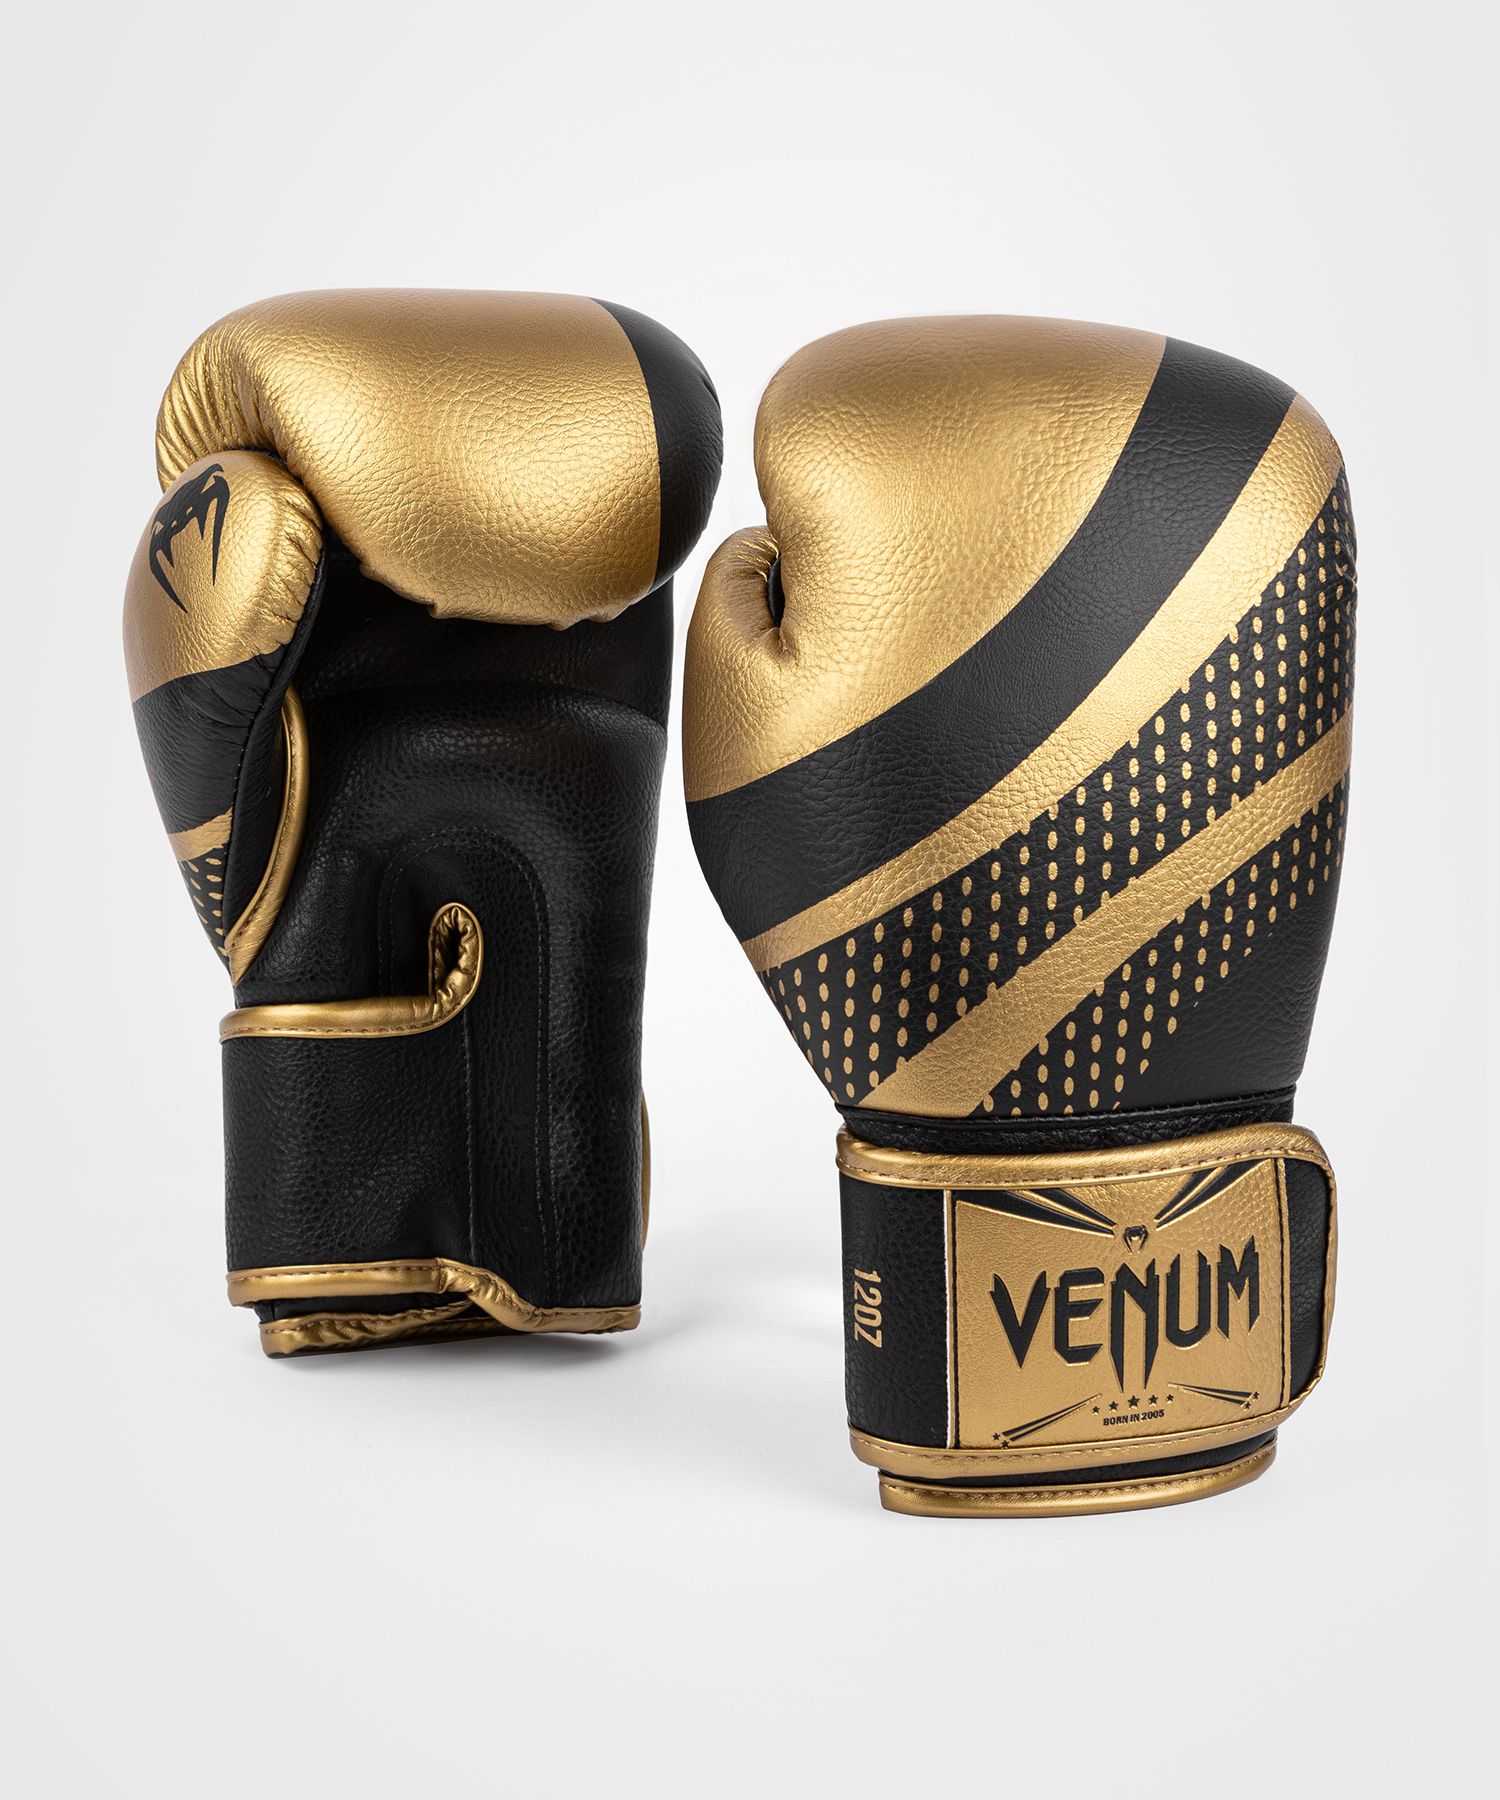 Venum Lightning Boxing Gloves - Gold/Black